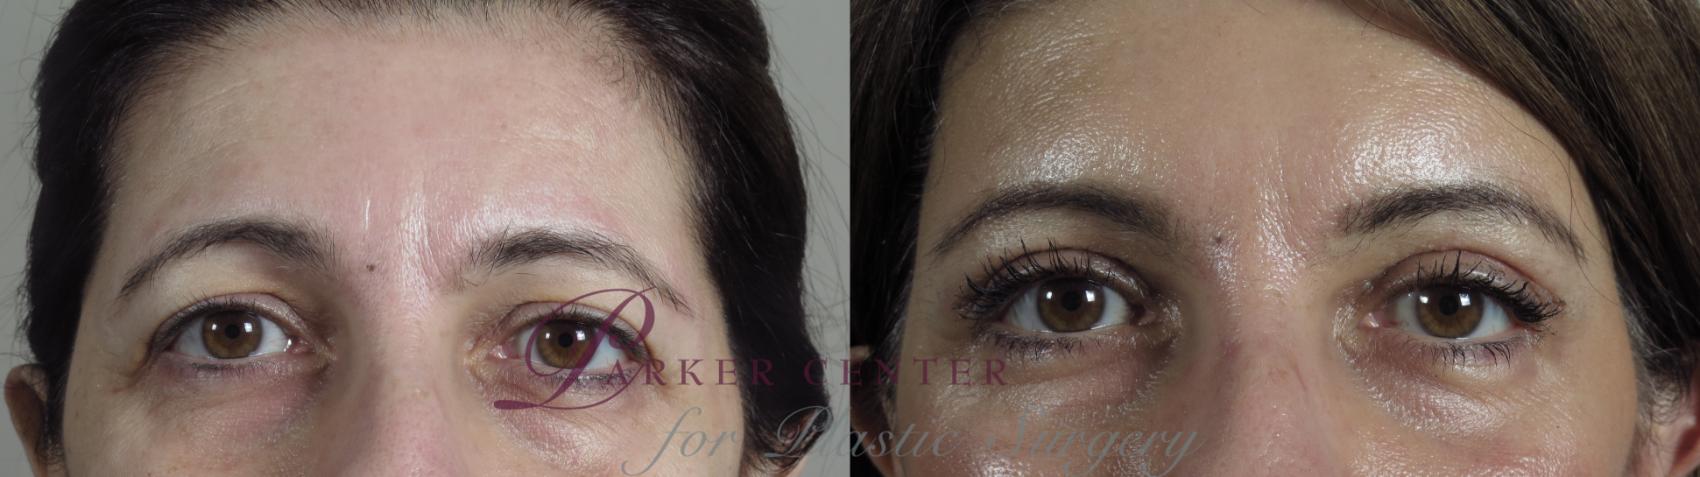 Eyelid Lift Case 1093 Before & After Front | Paramus, NJ | Parker Center for Plastic Surgery